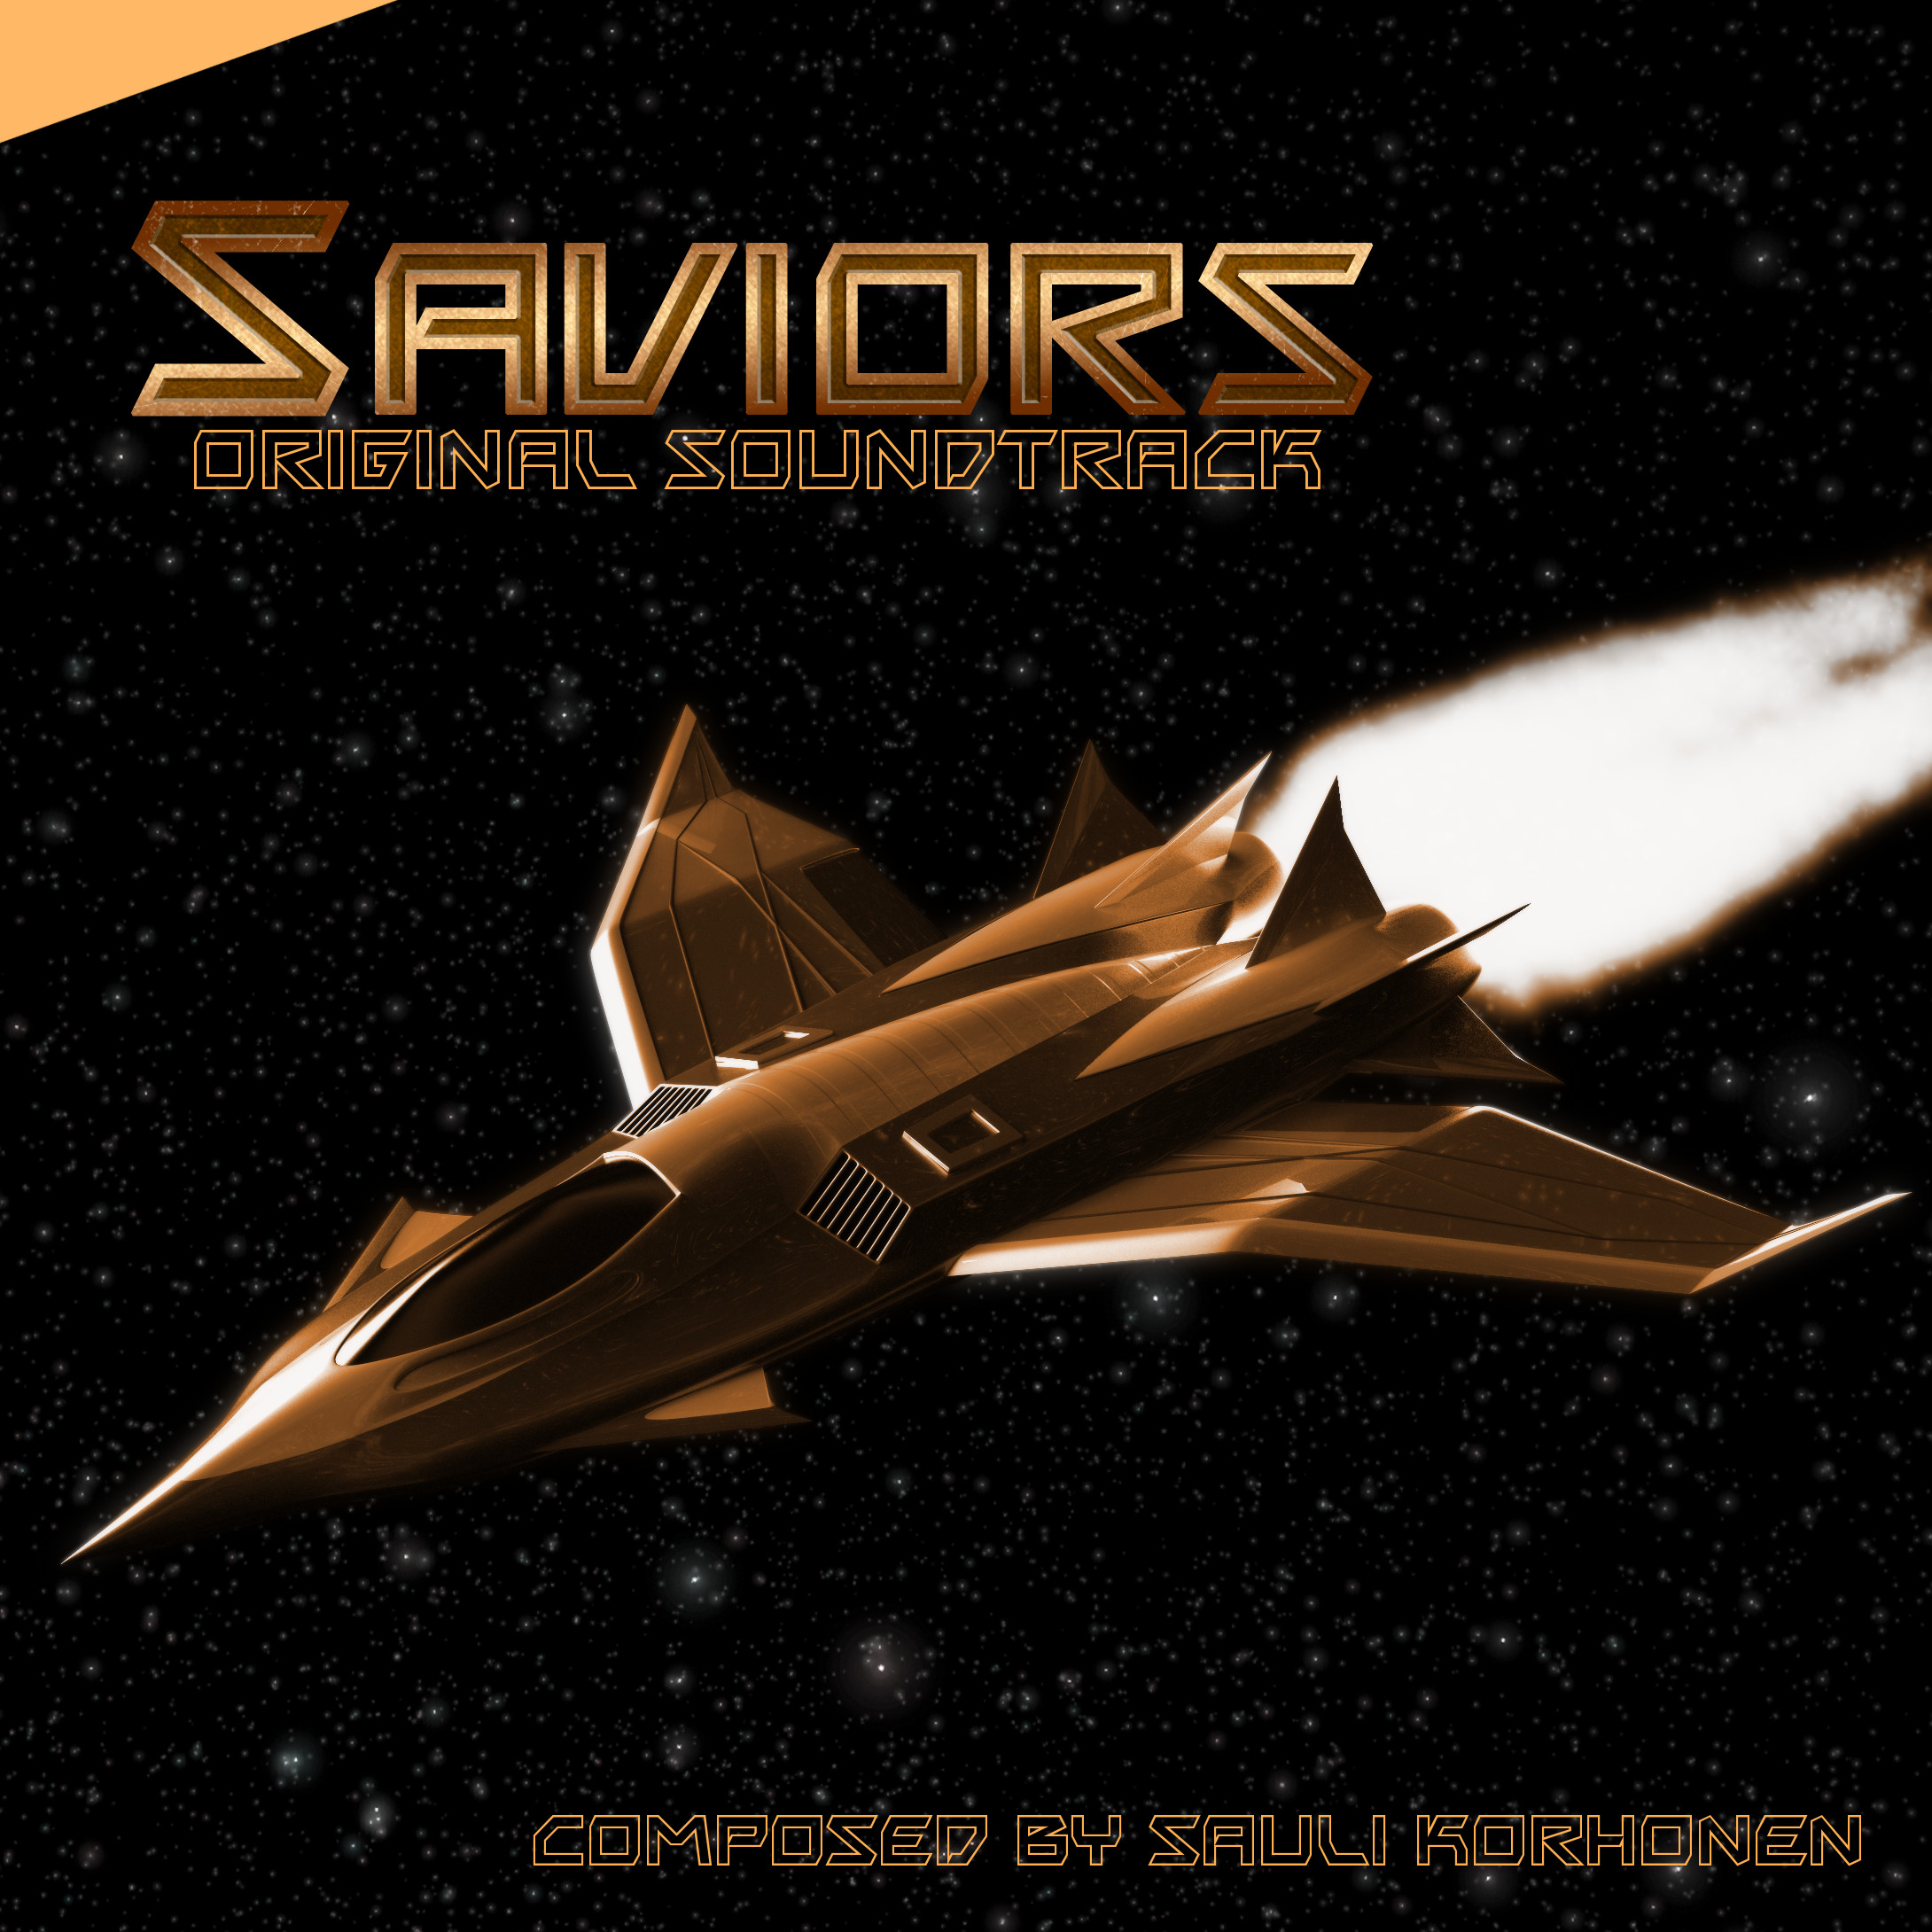 Star Saviors - Saviors OST DLC Steam Gift 21.46 usd